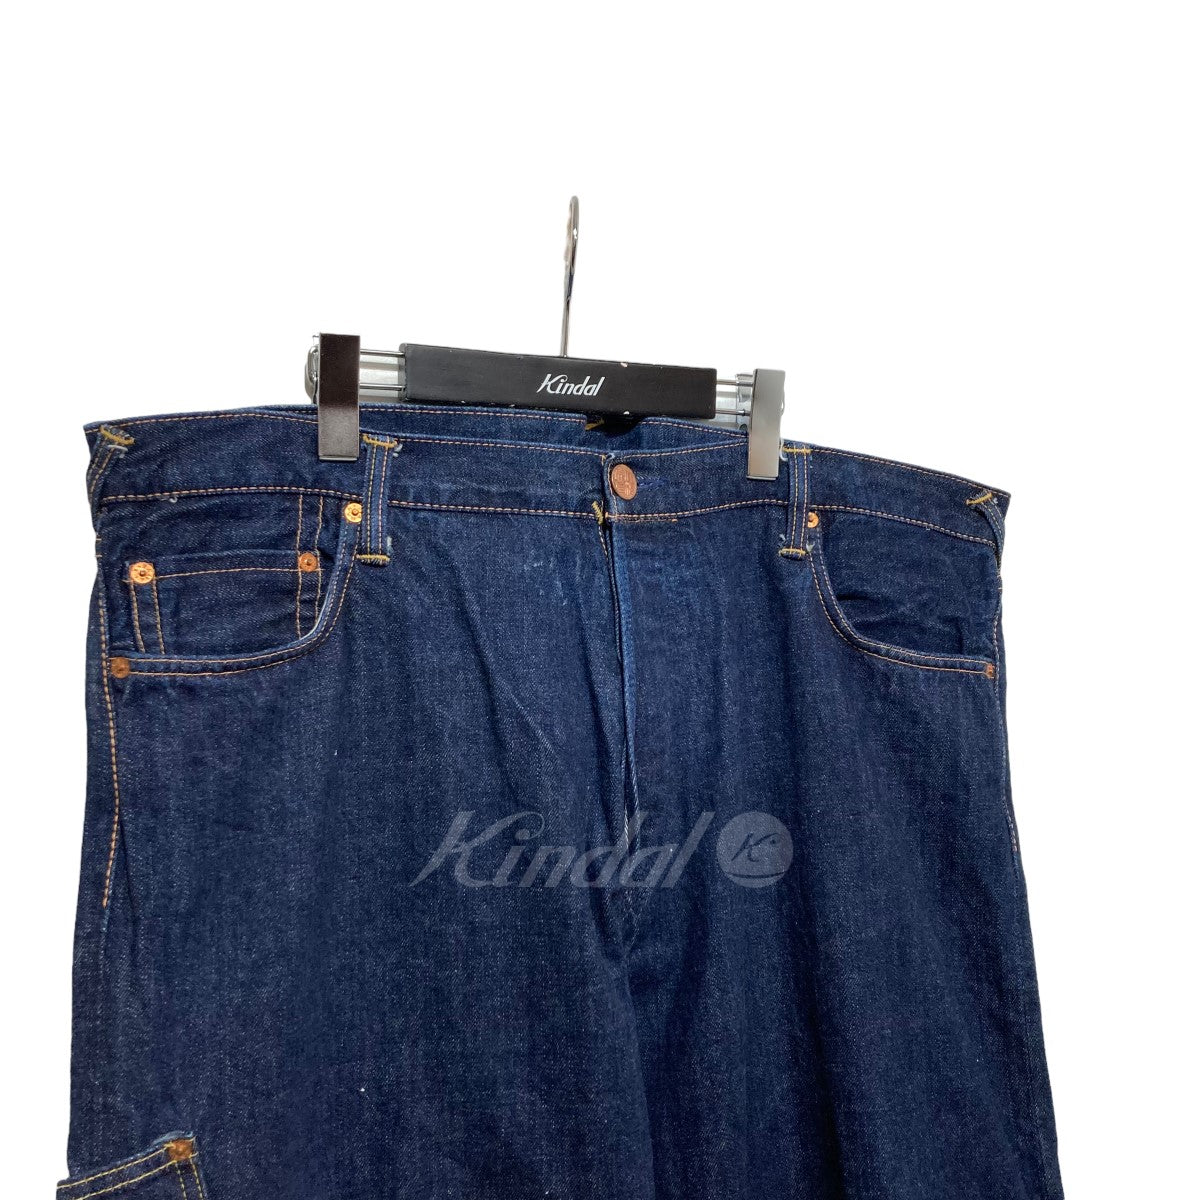 EVISU jeans(エビスジーンズ) EVISU 総刺繍 メニーポケット 塩谷 ...